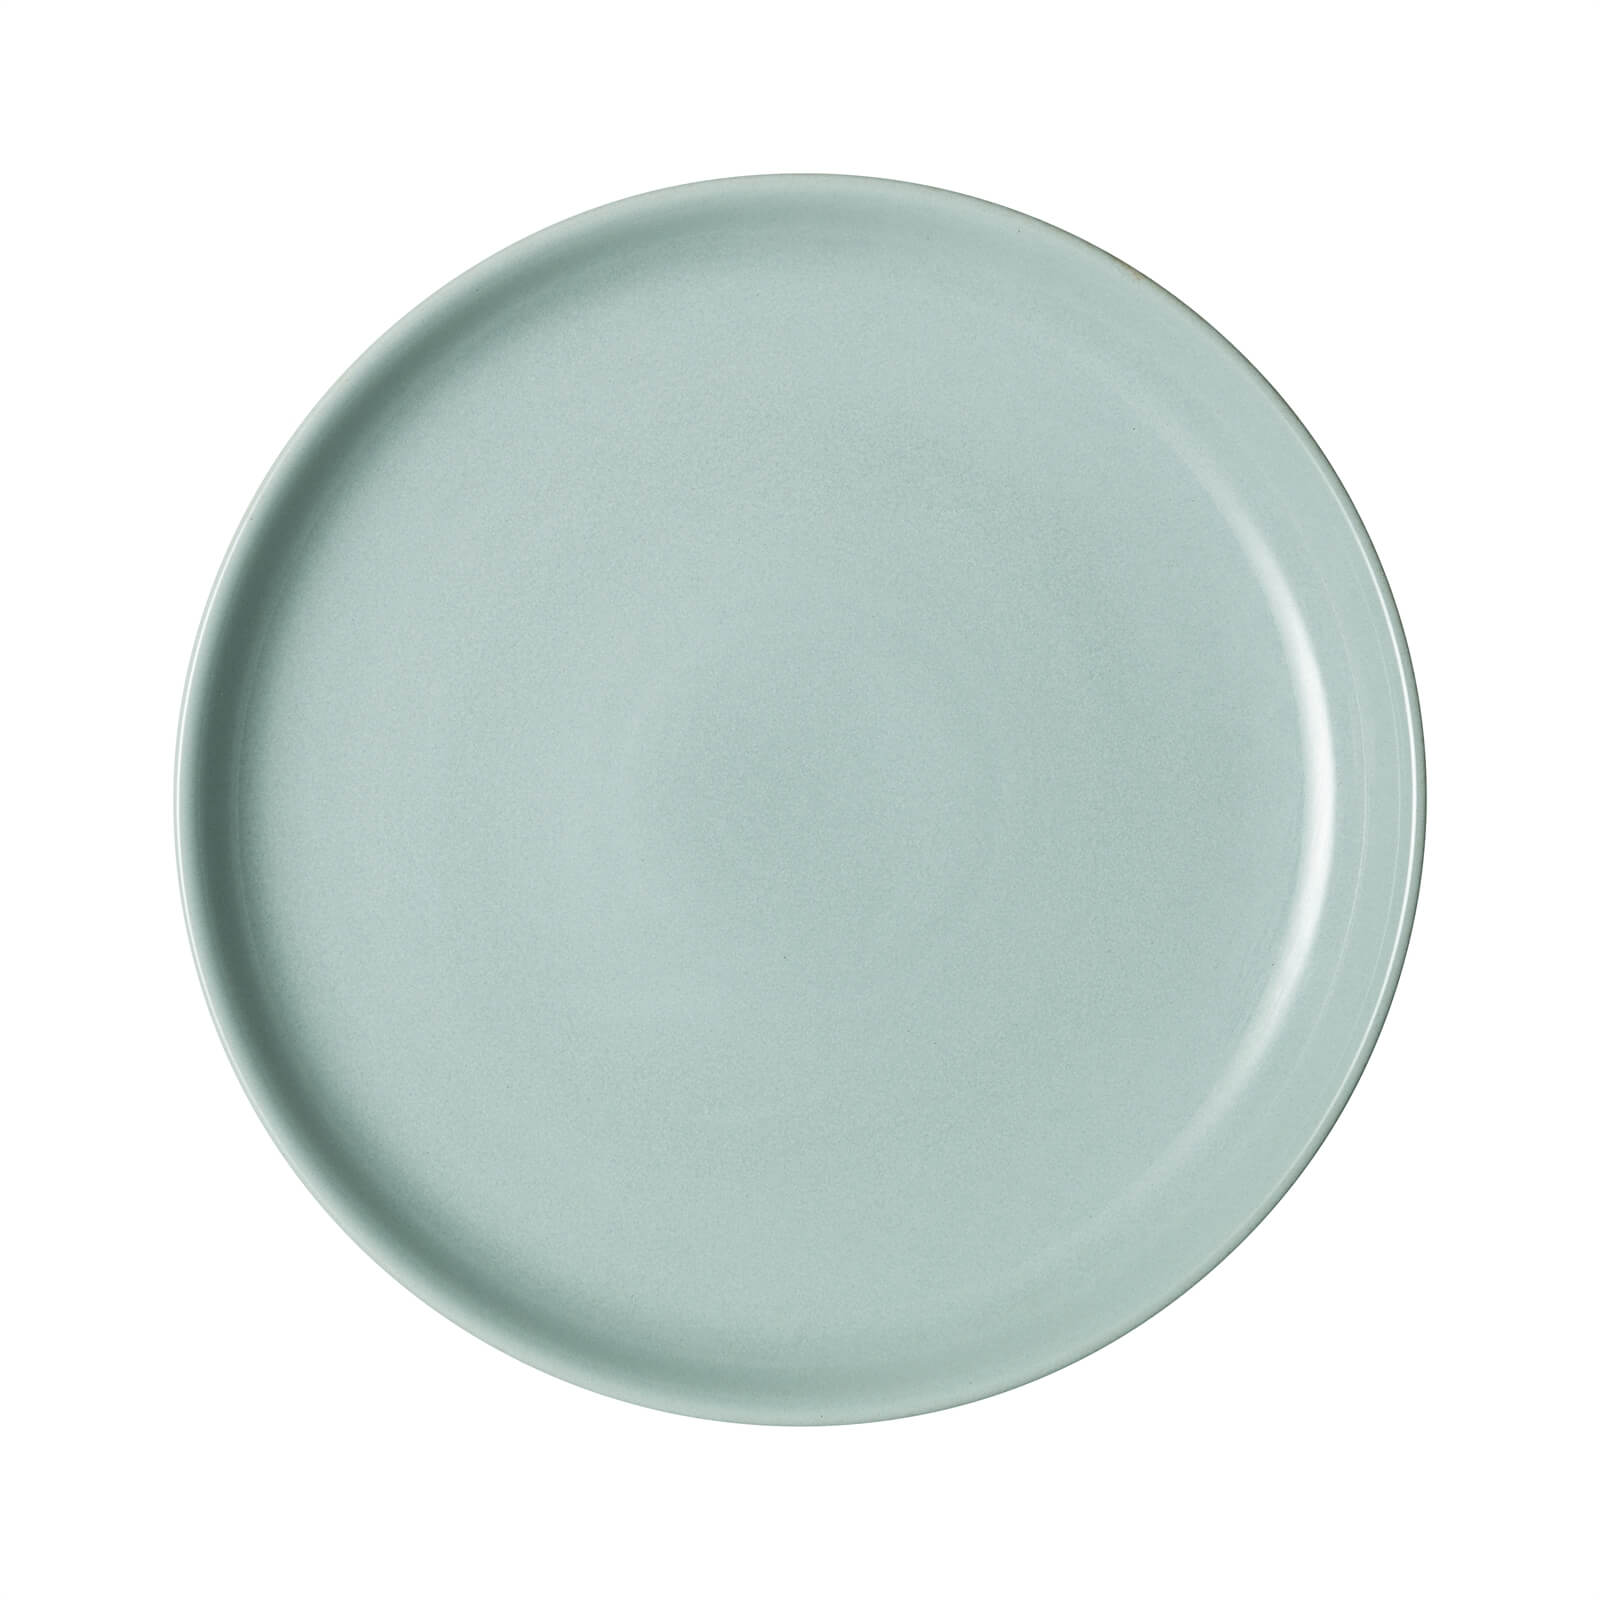 Denby Intro 12 Piece Tableware Set - Pale Blue